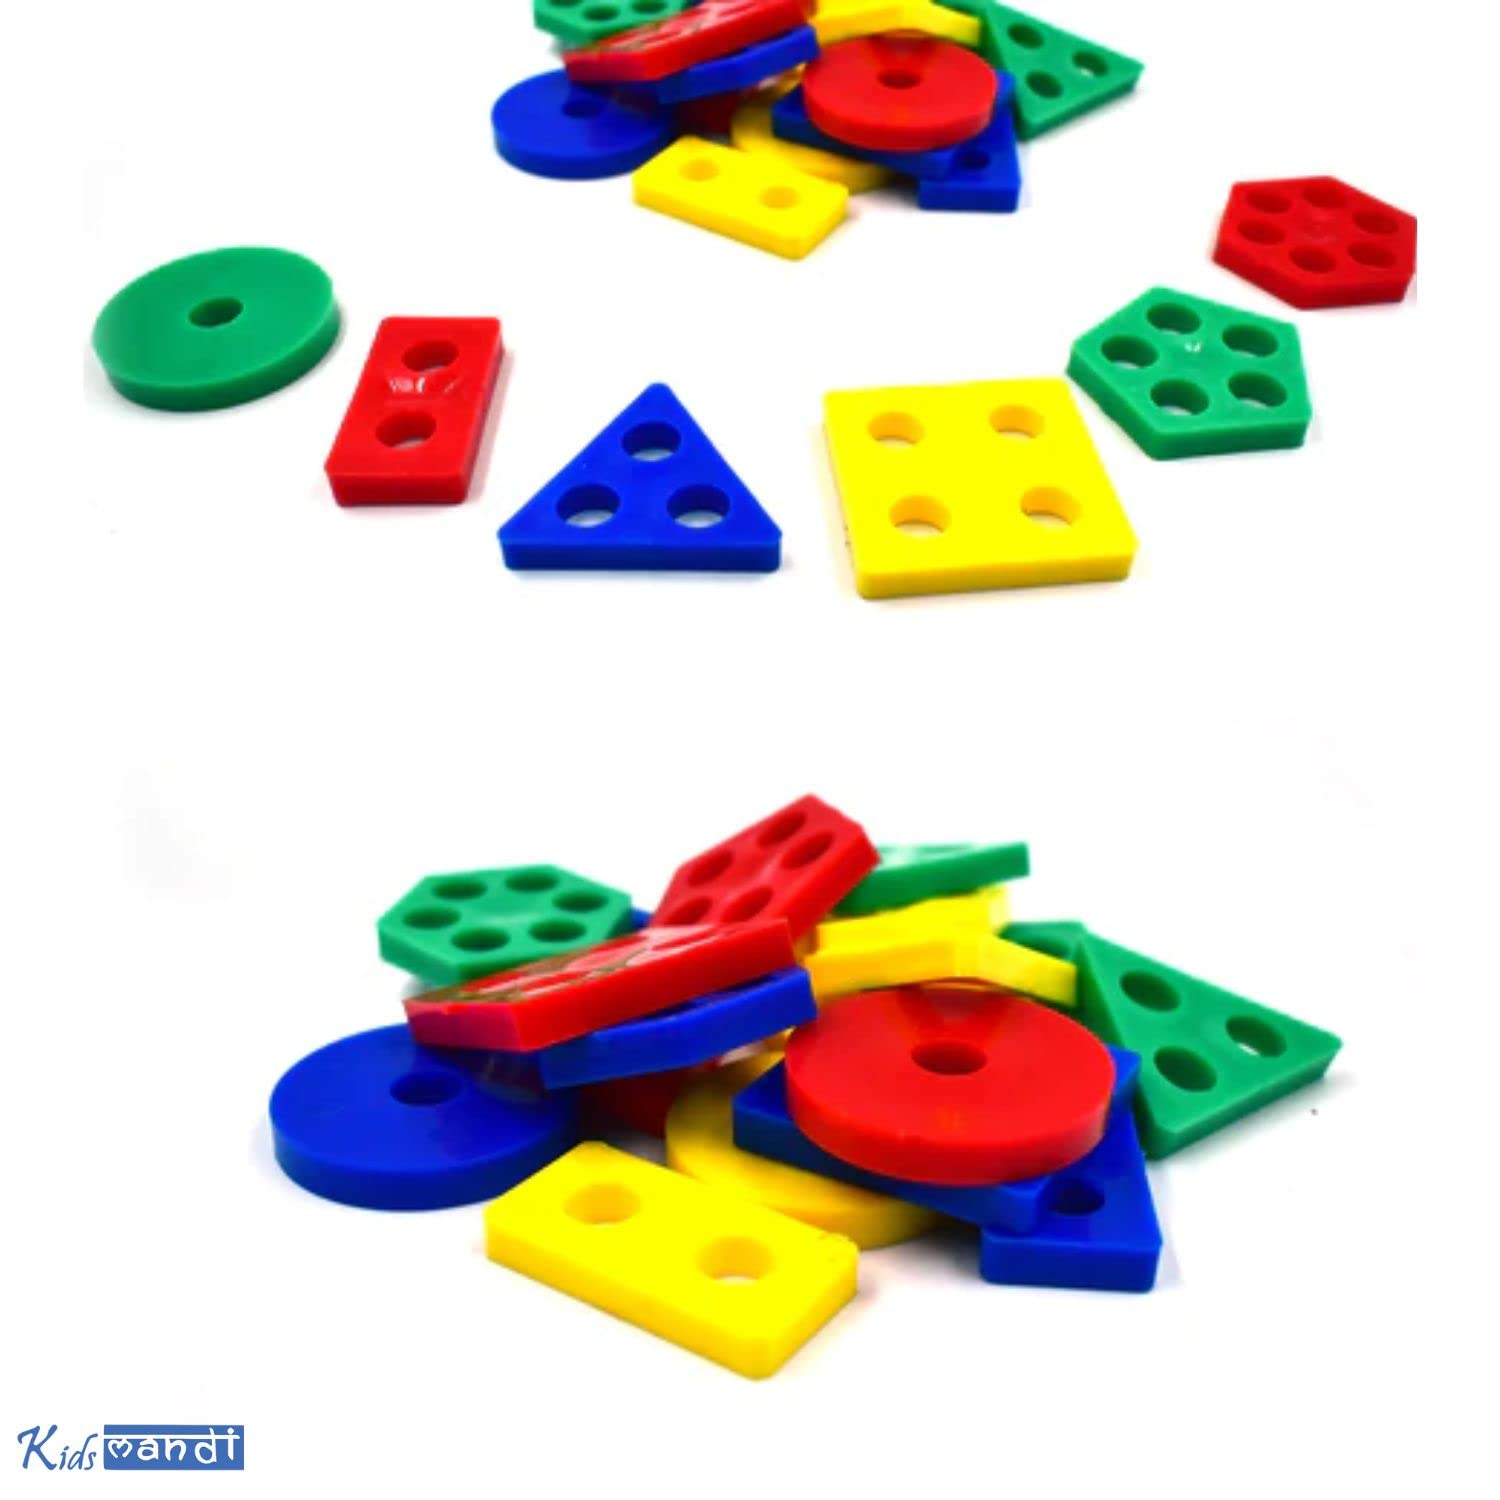 Kids Mandi Geometrix Board for Toddlers Educational Toy